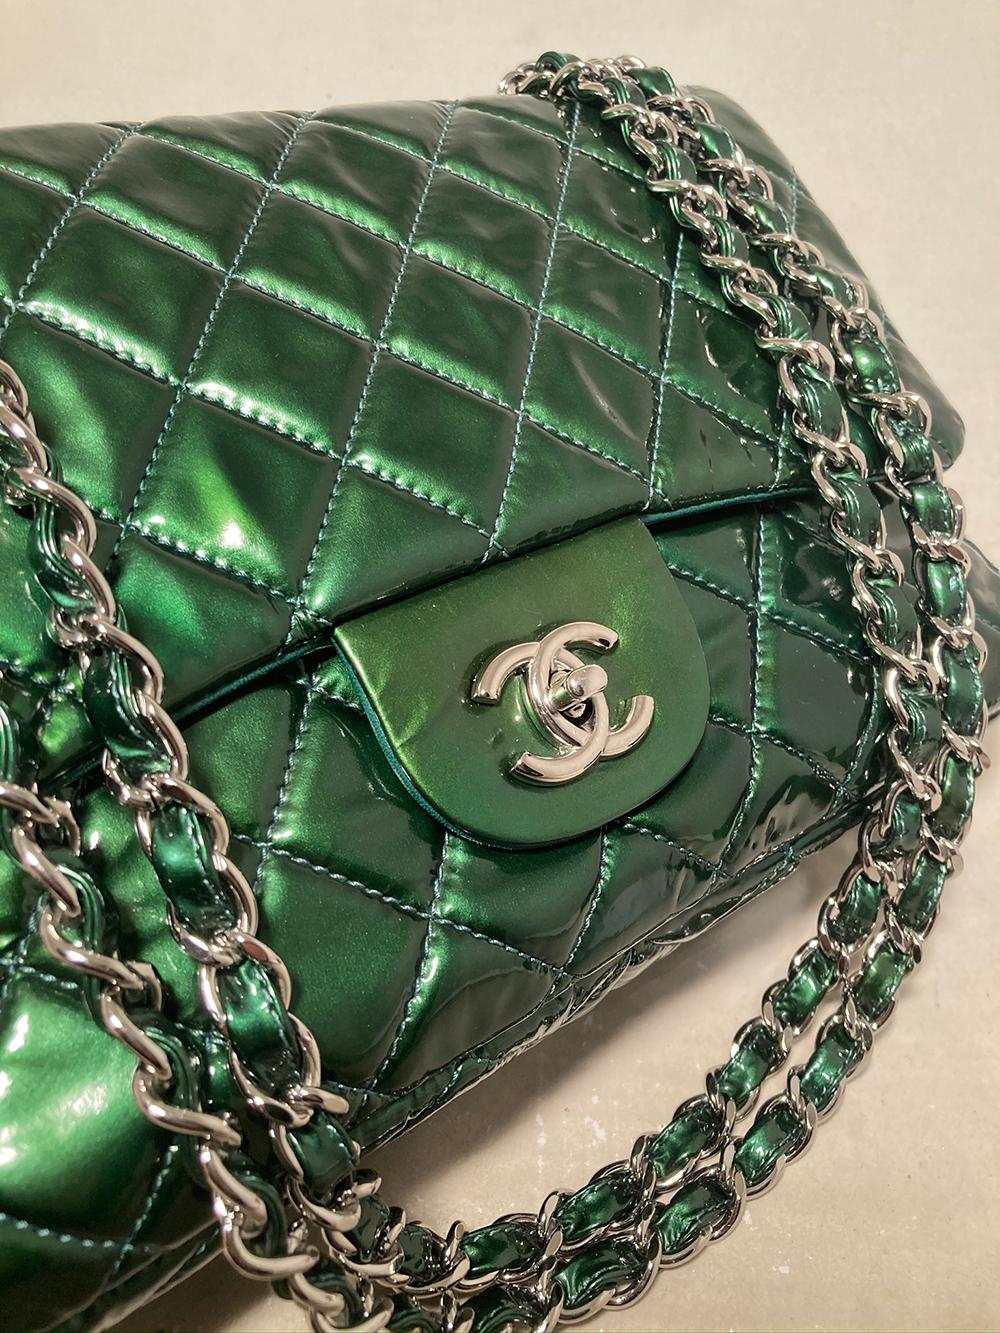 CHANEL RARE Metallic Green Patent Leather Jumbo Classic Flap